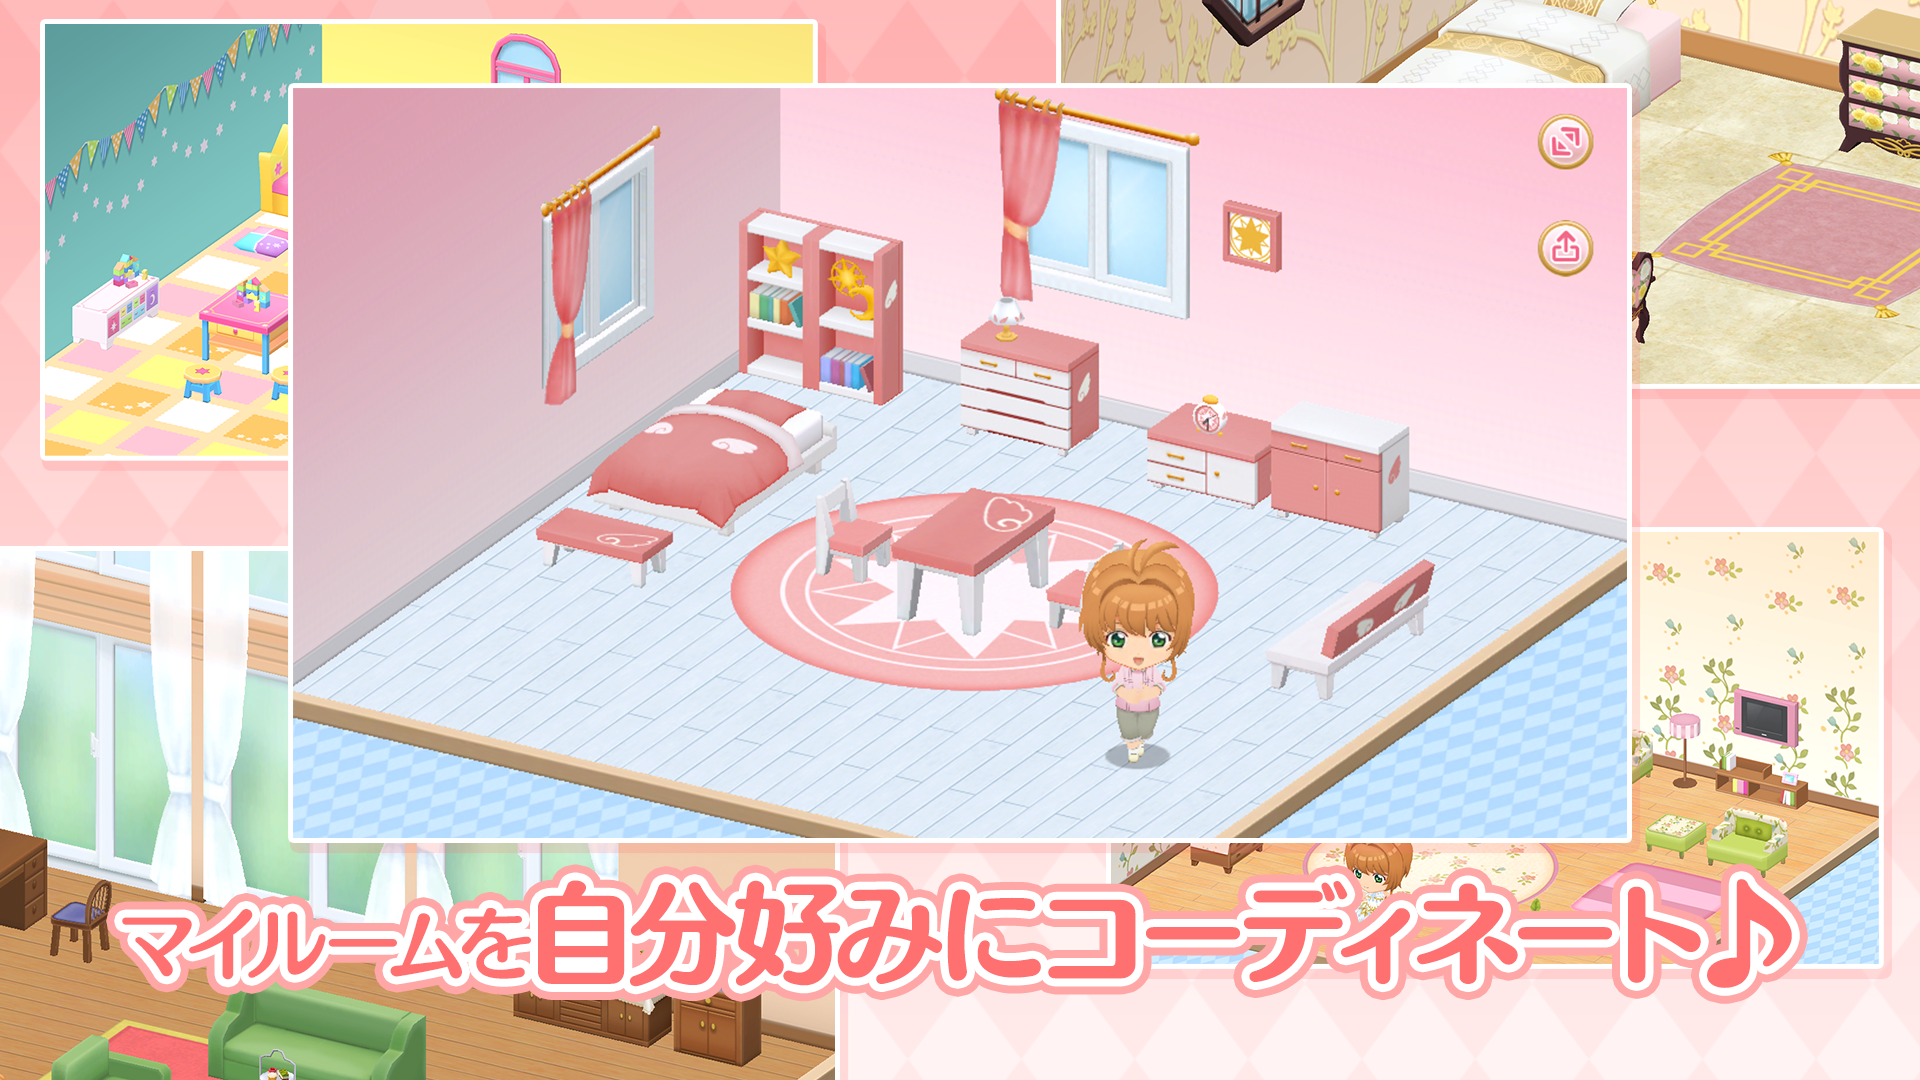 Cardcaptor Sakura - Cardcaptor Sakura: Happiness Memories mobile